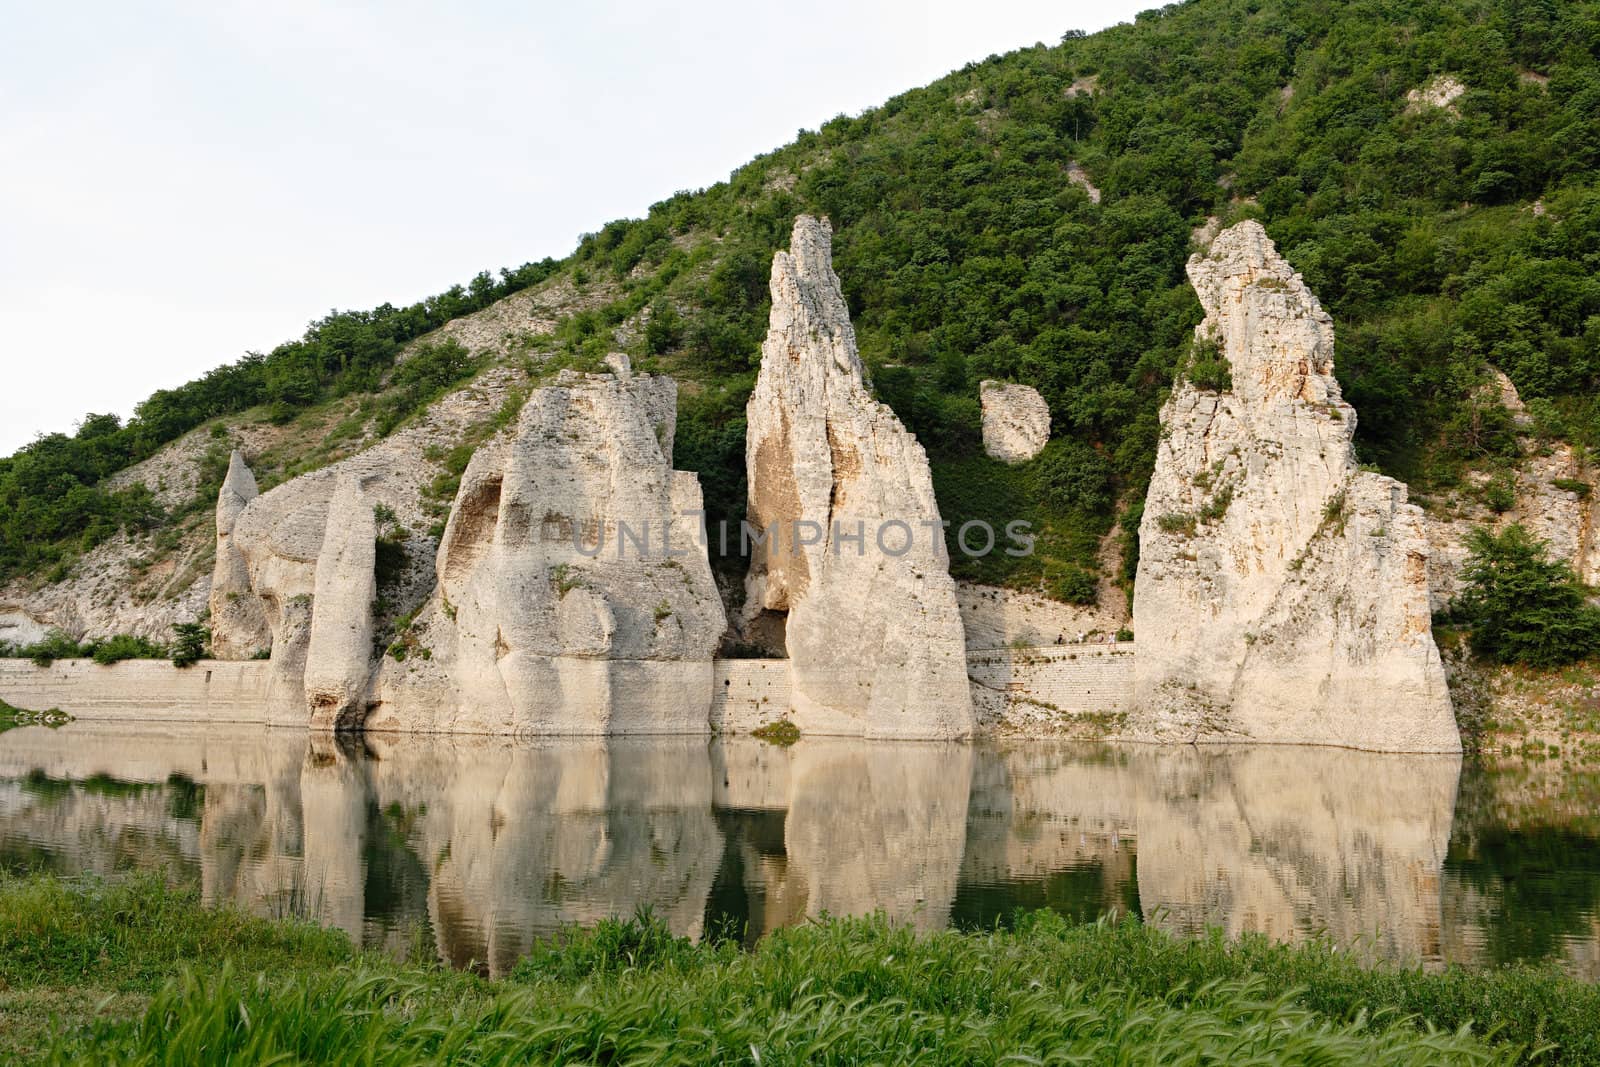 The wonderful rocks phenomenon near the Tsonevo dam lake, Bulgaria